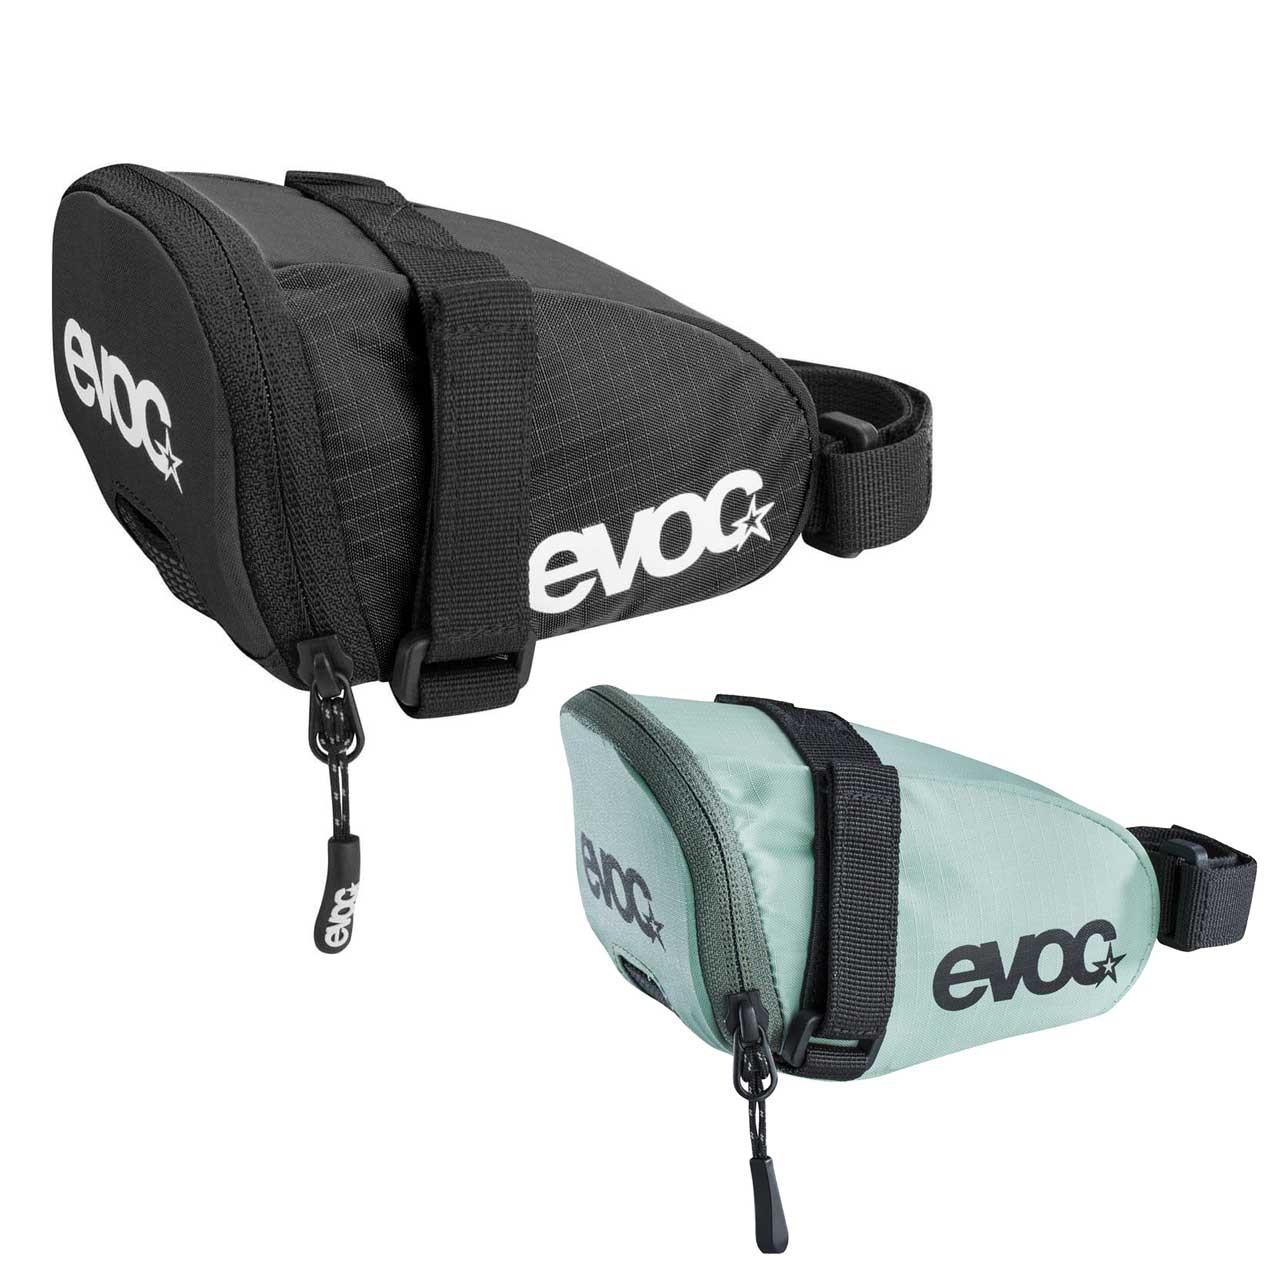 EVOC Saddle Bag